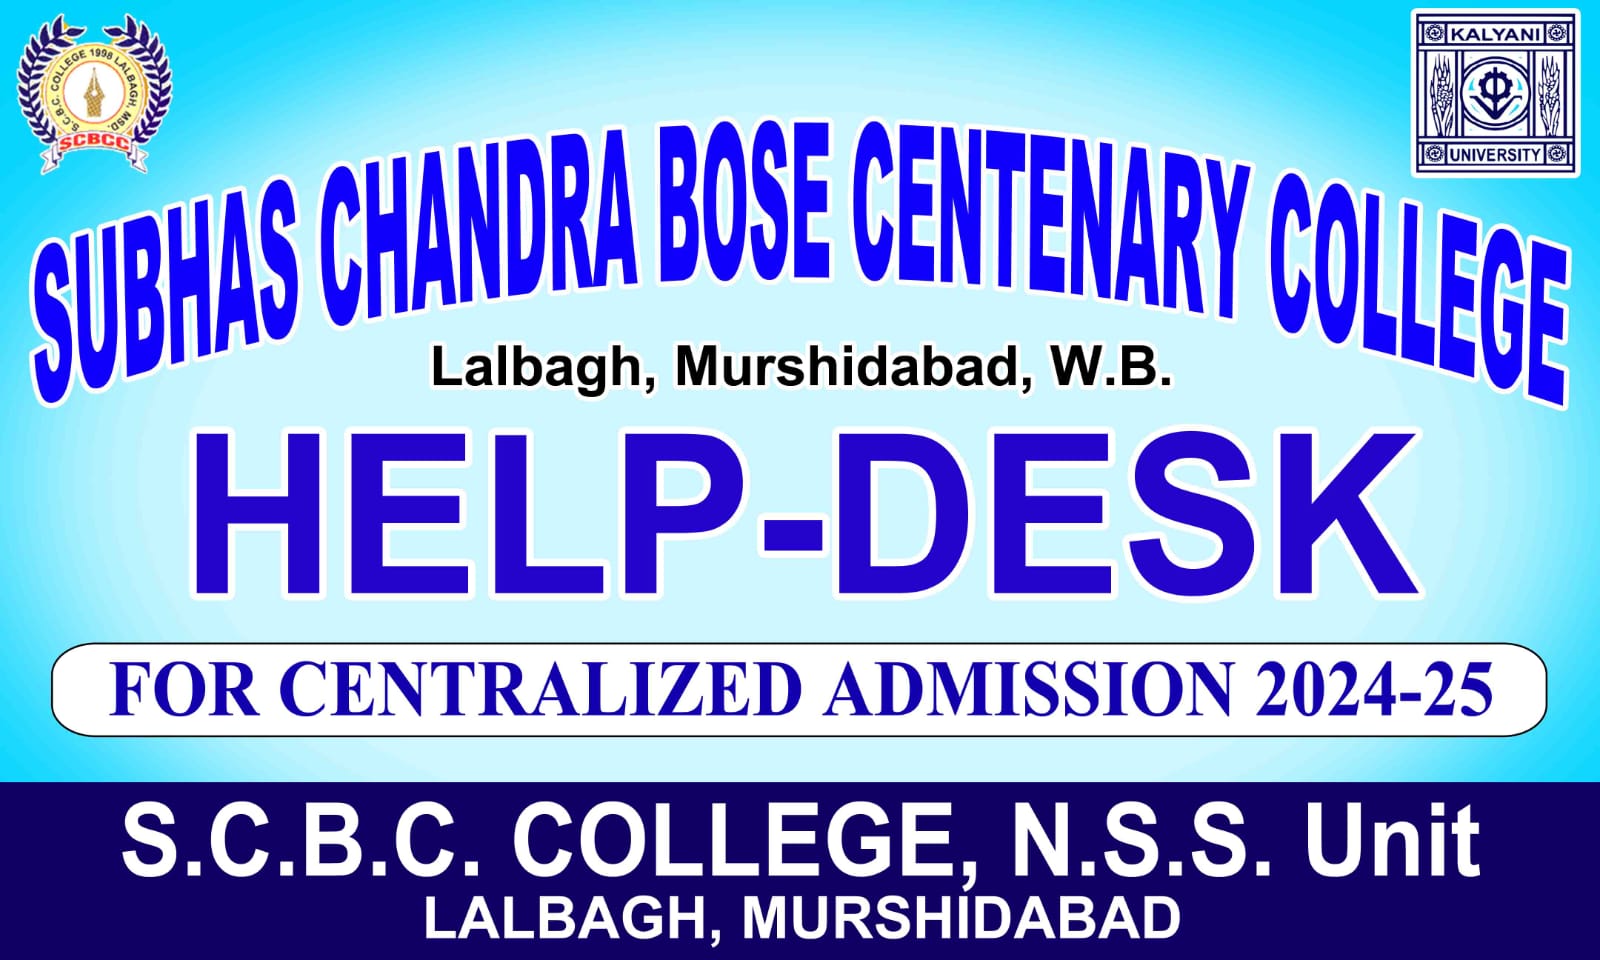 Subhas Ch. Bose Centenary College 